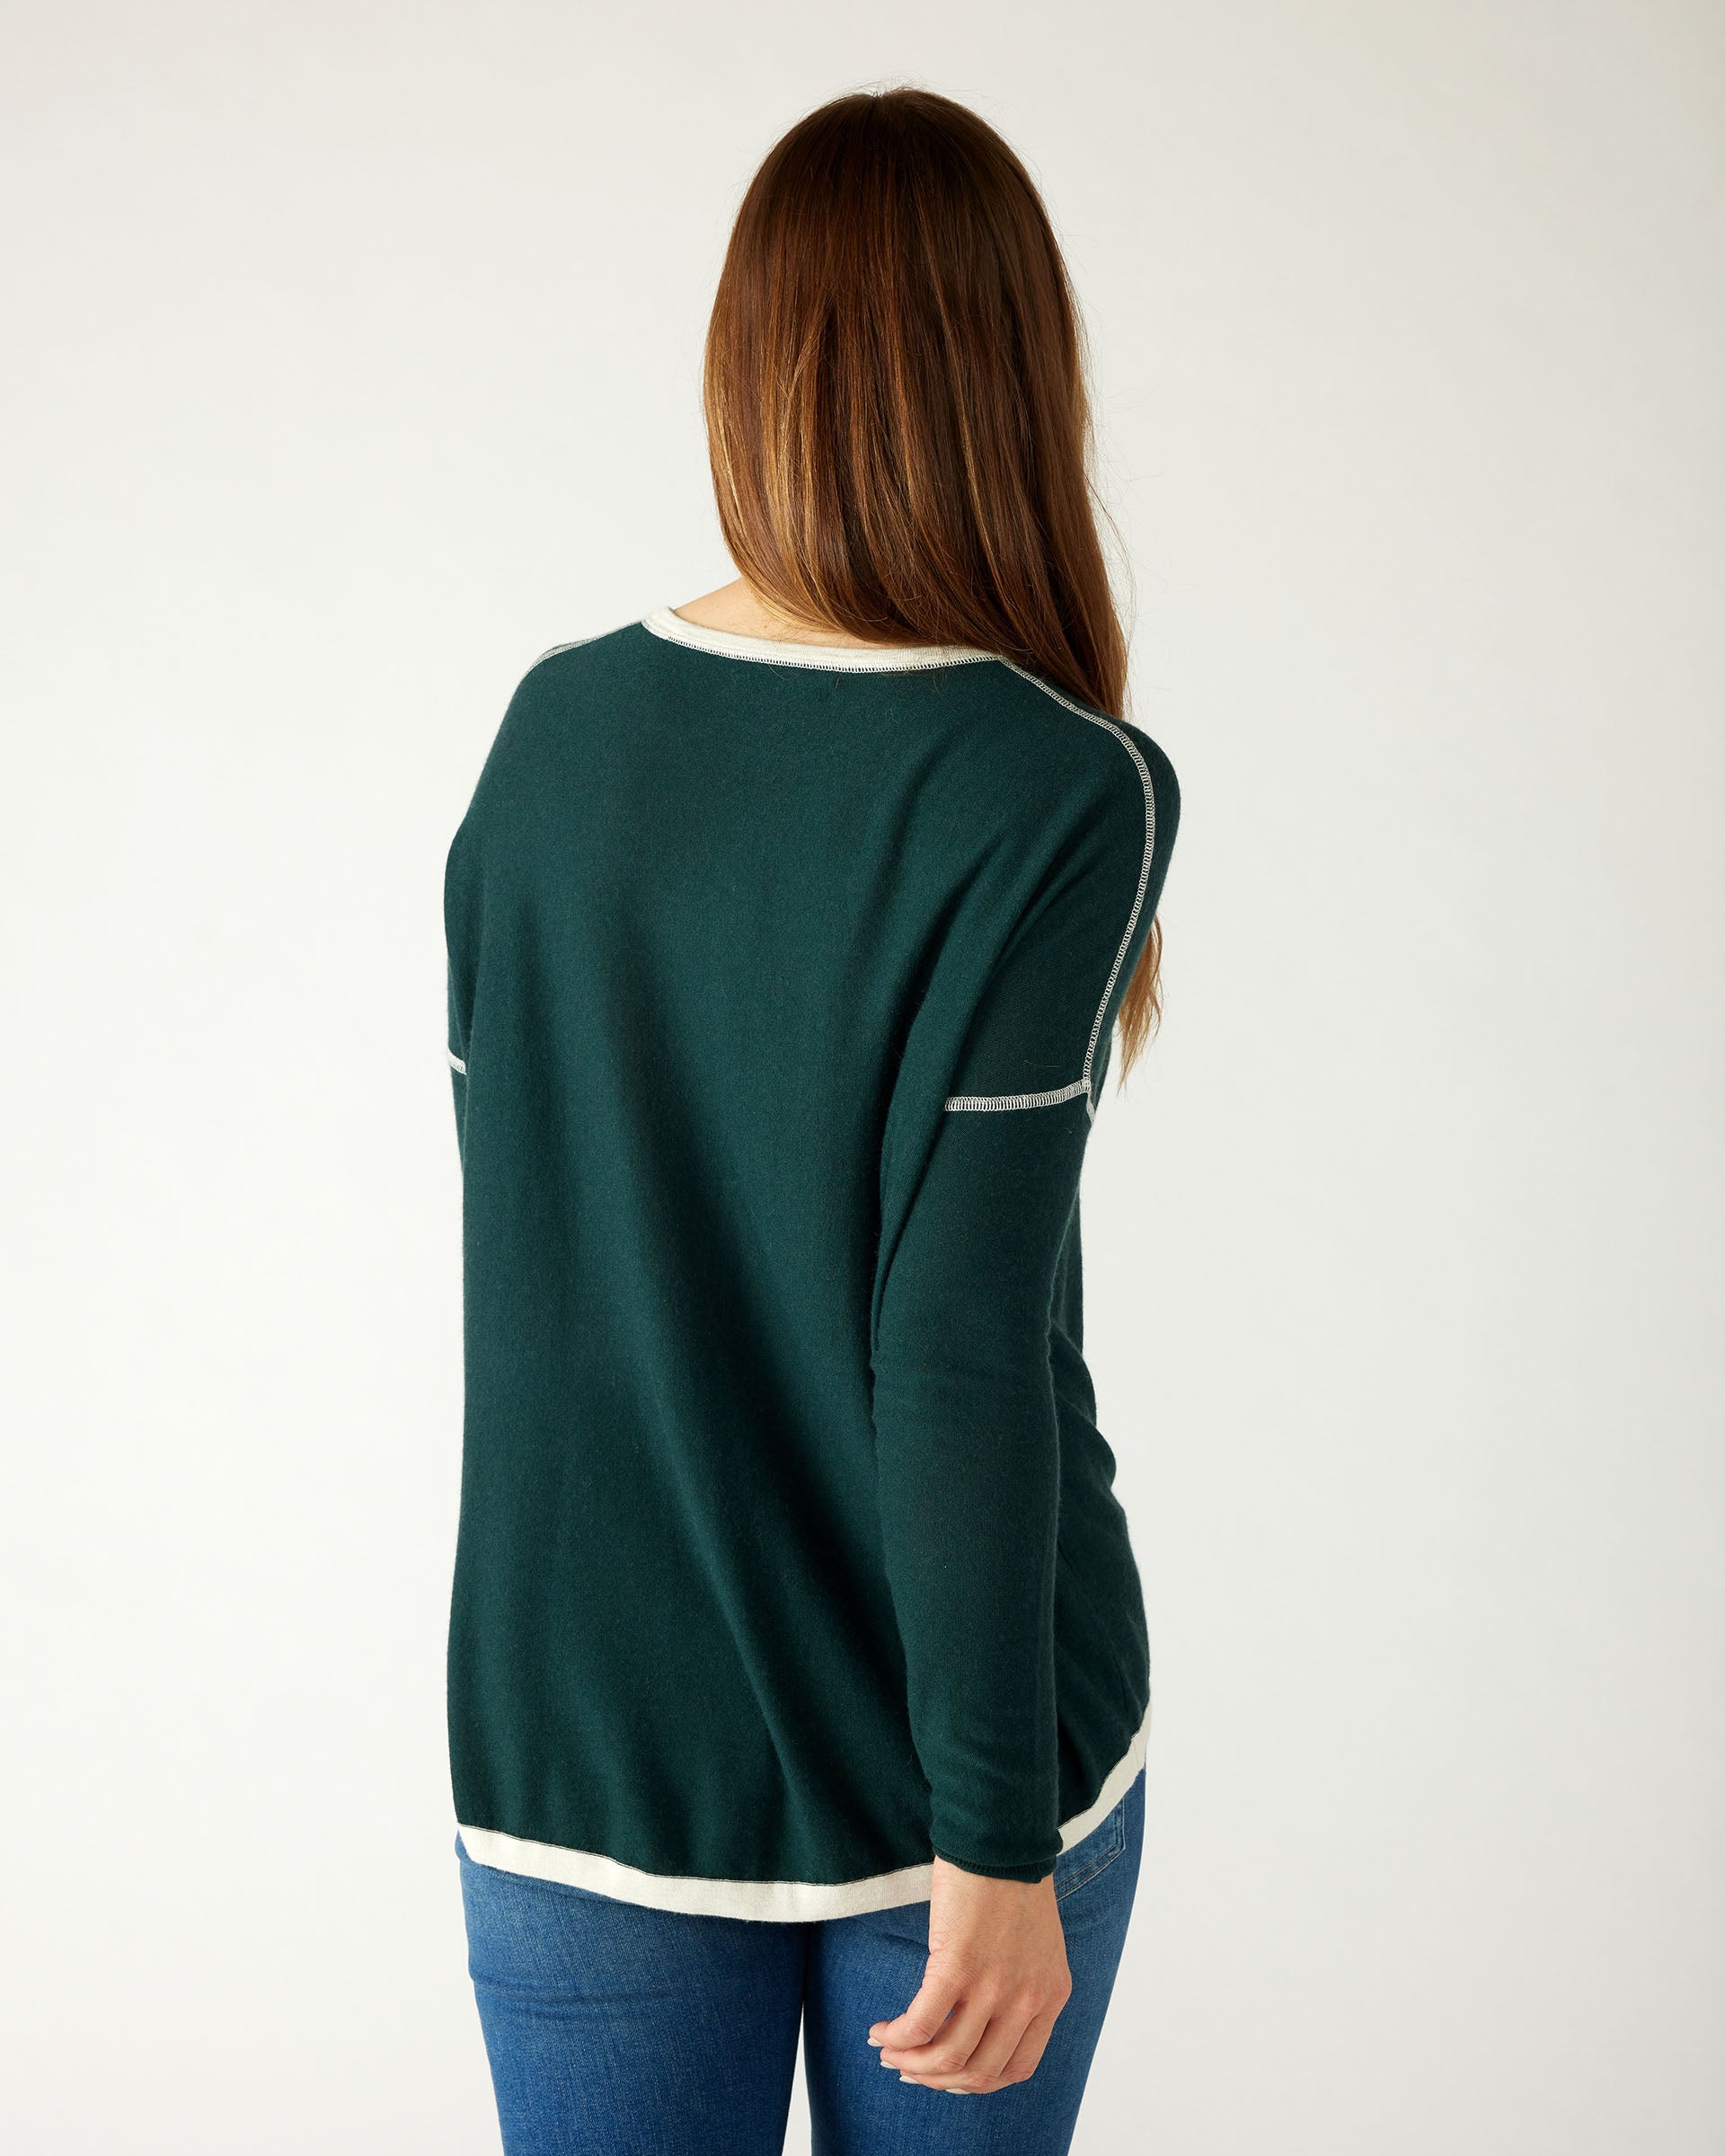 rear view of woman wearing mersea saltwash sweater in forest green